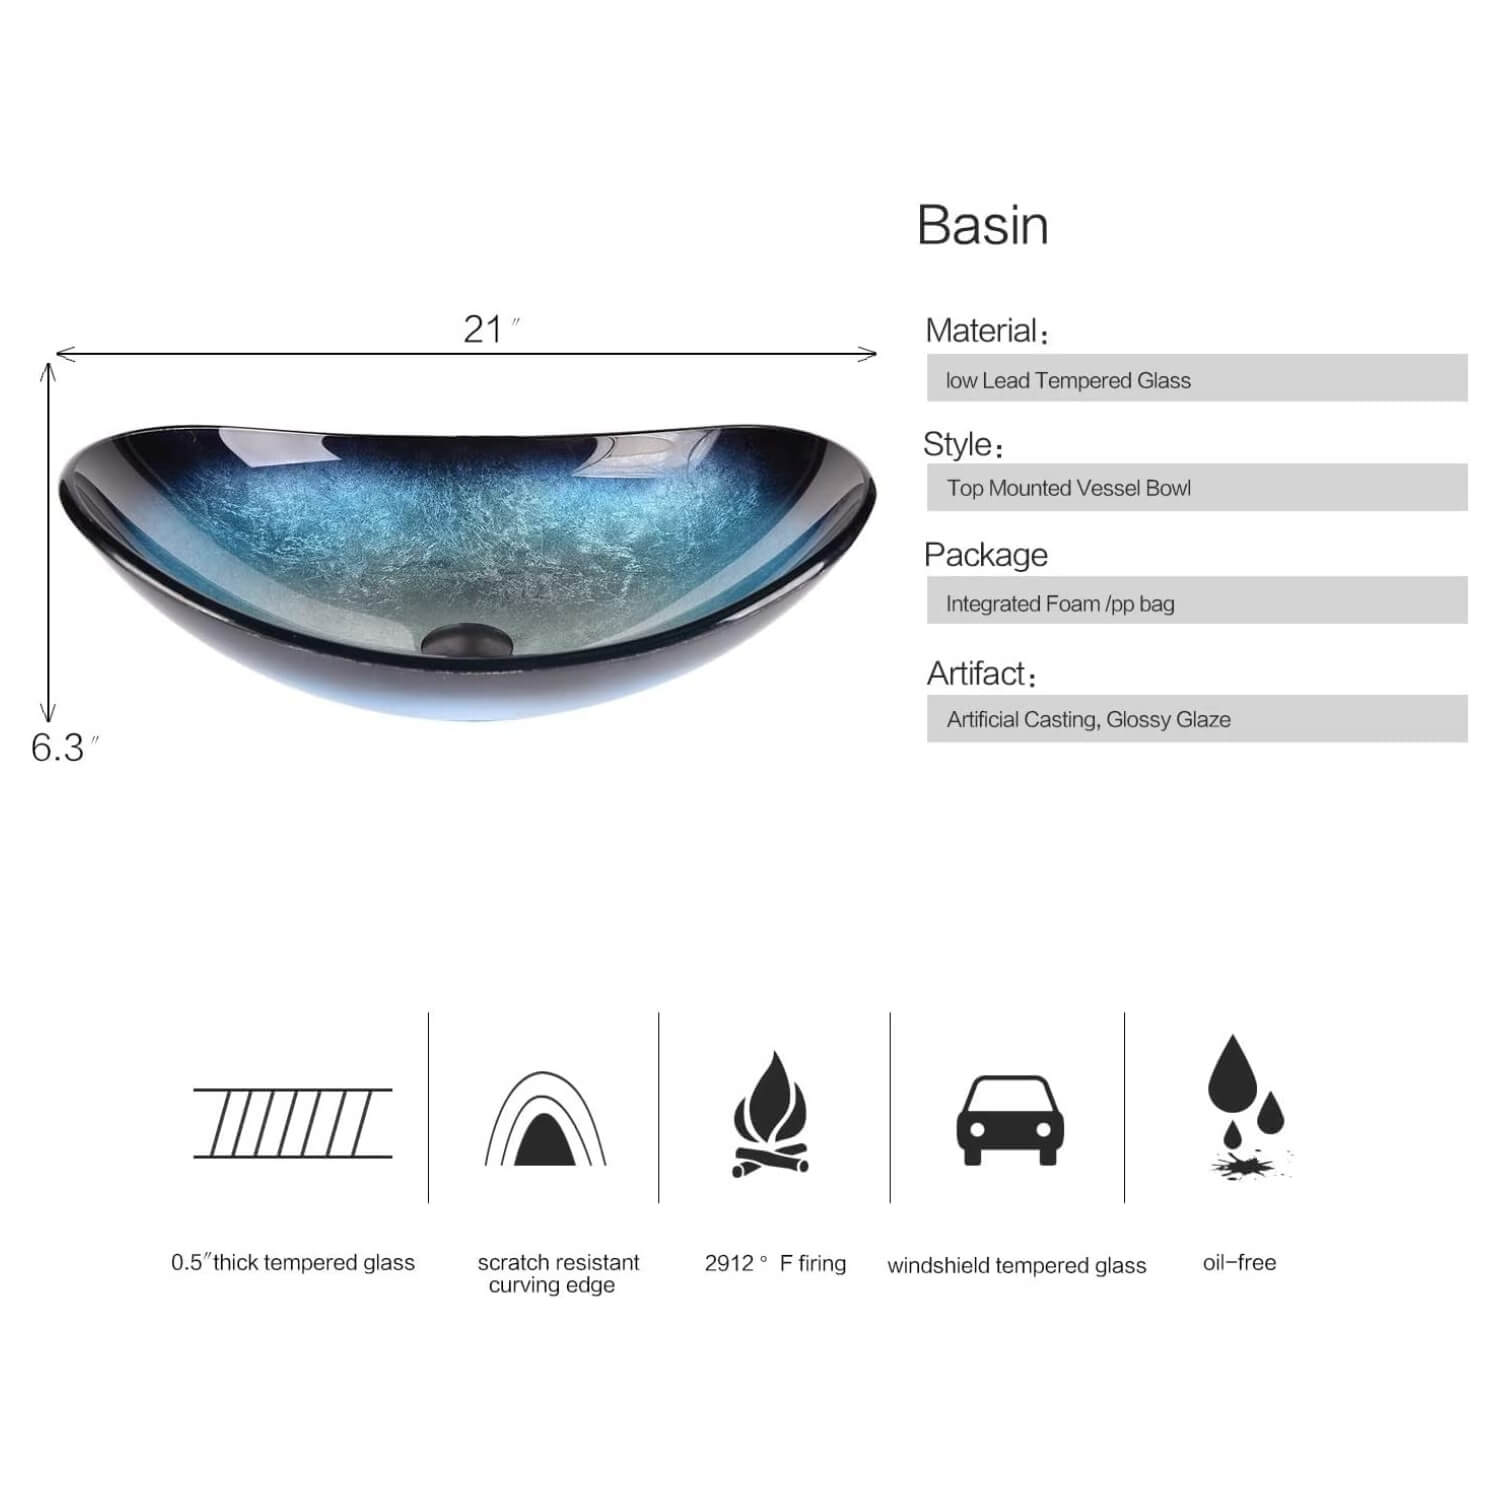 Description of elecwish blur boat glass sink